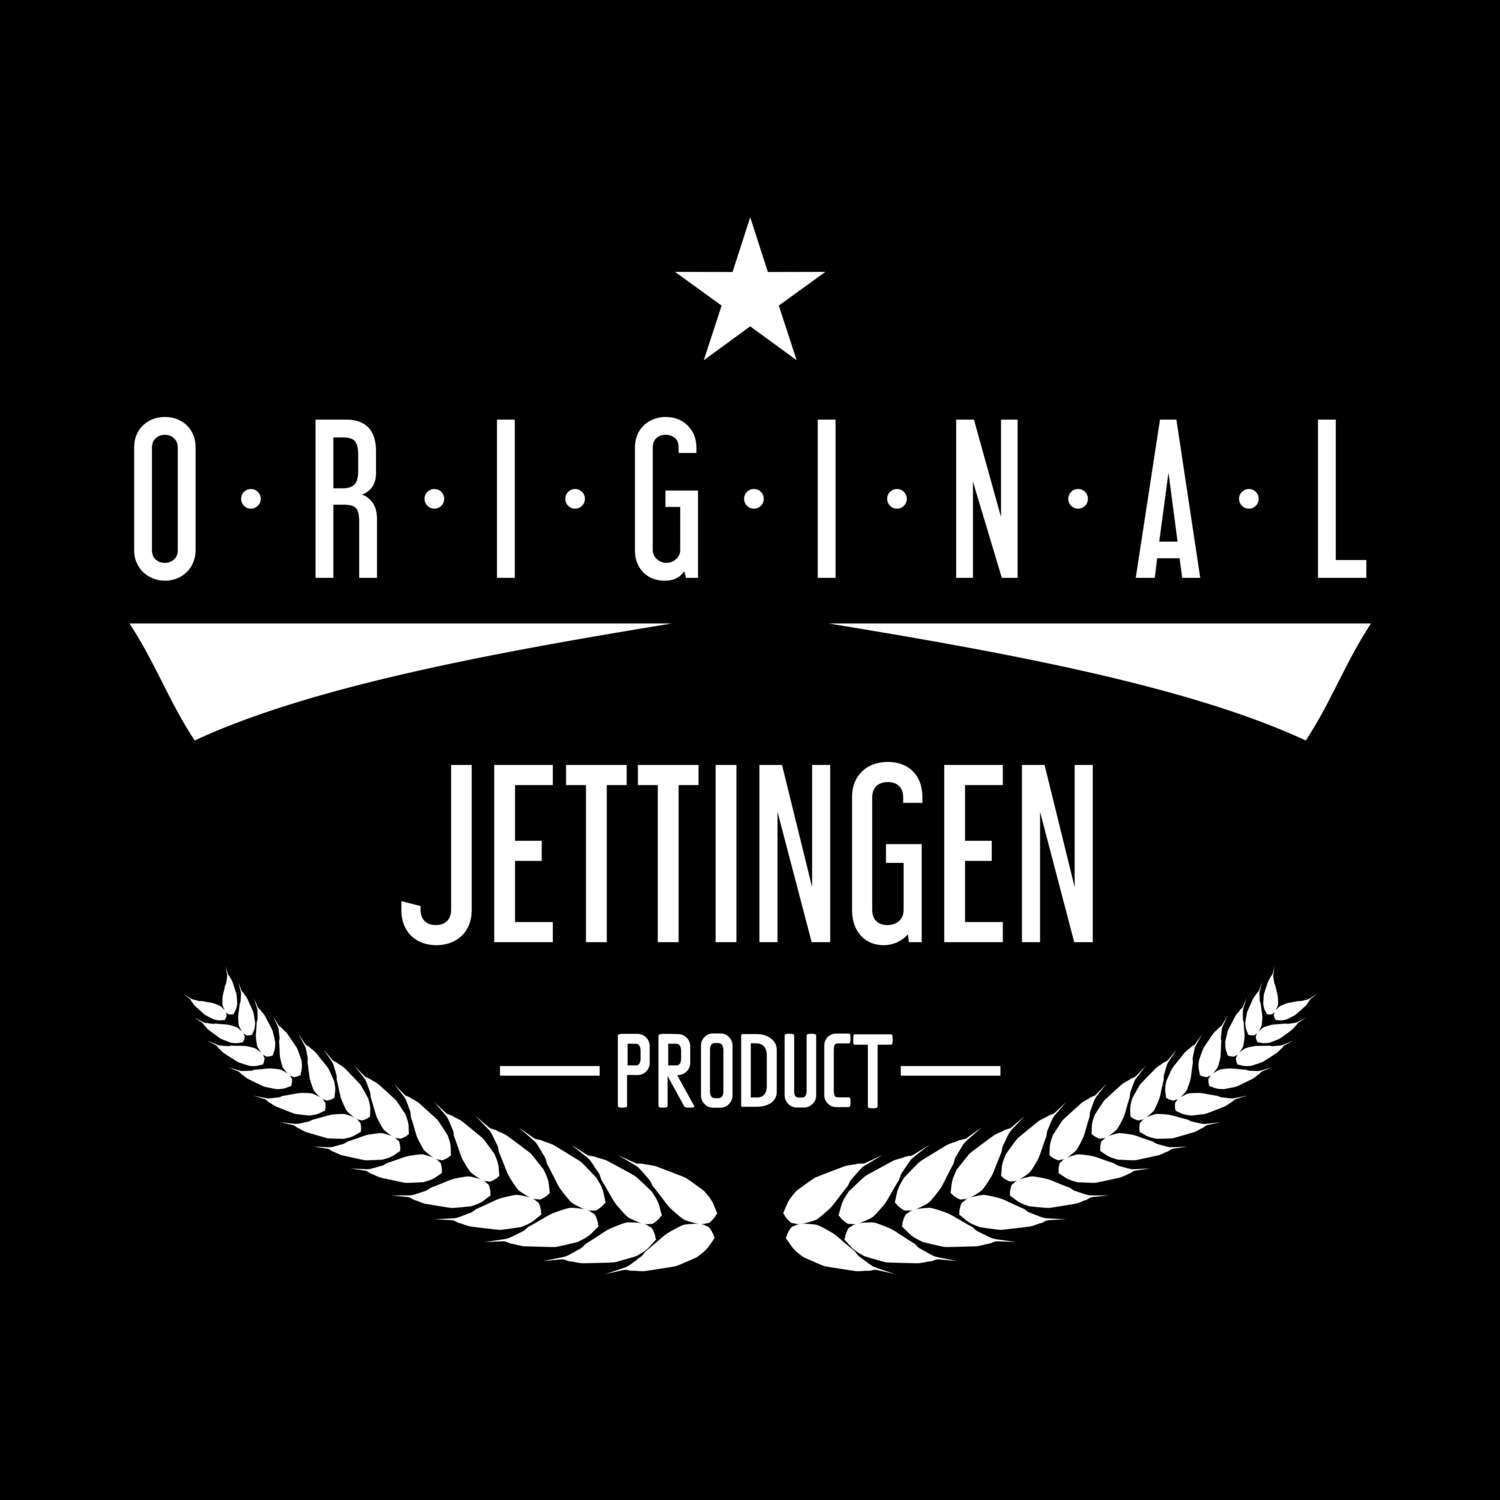 Jettingen T-Shirt »Original Product«